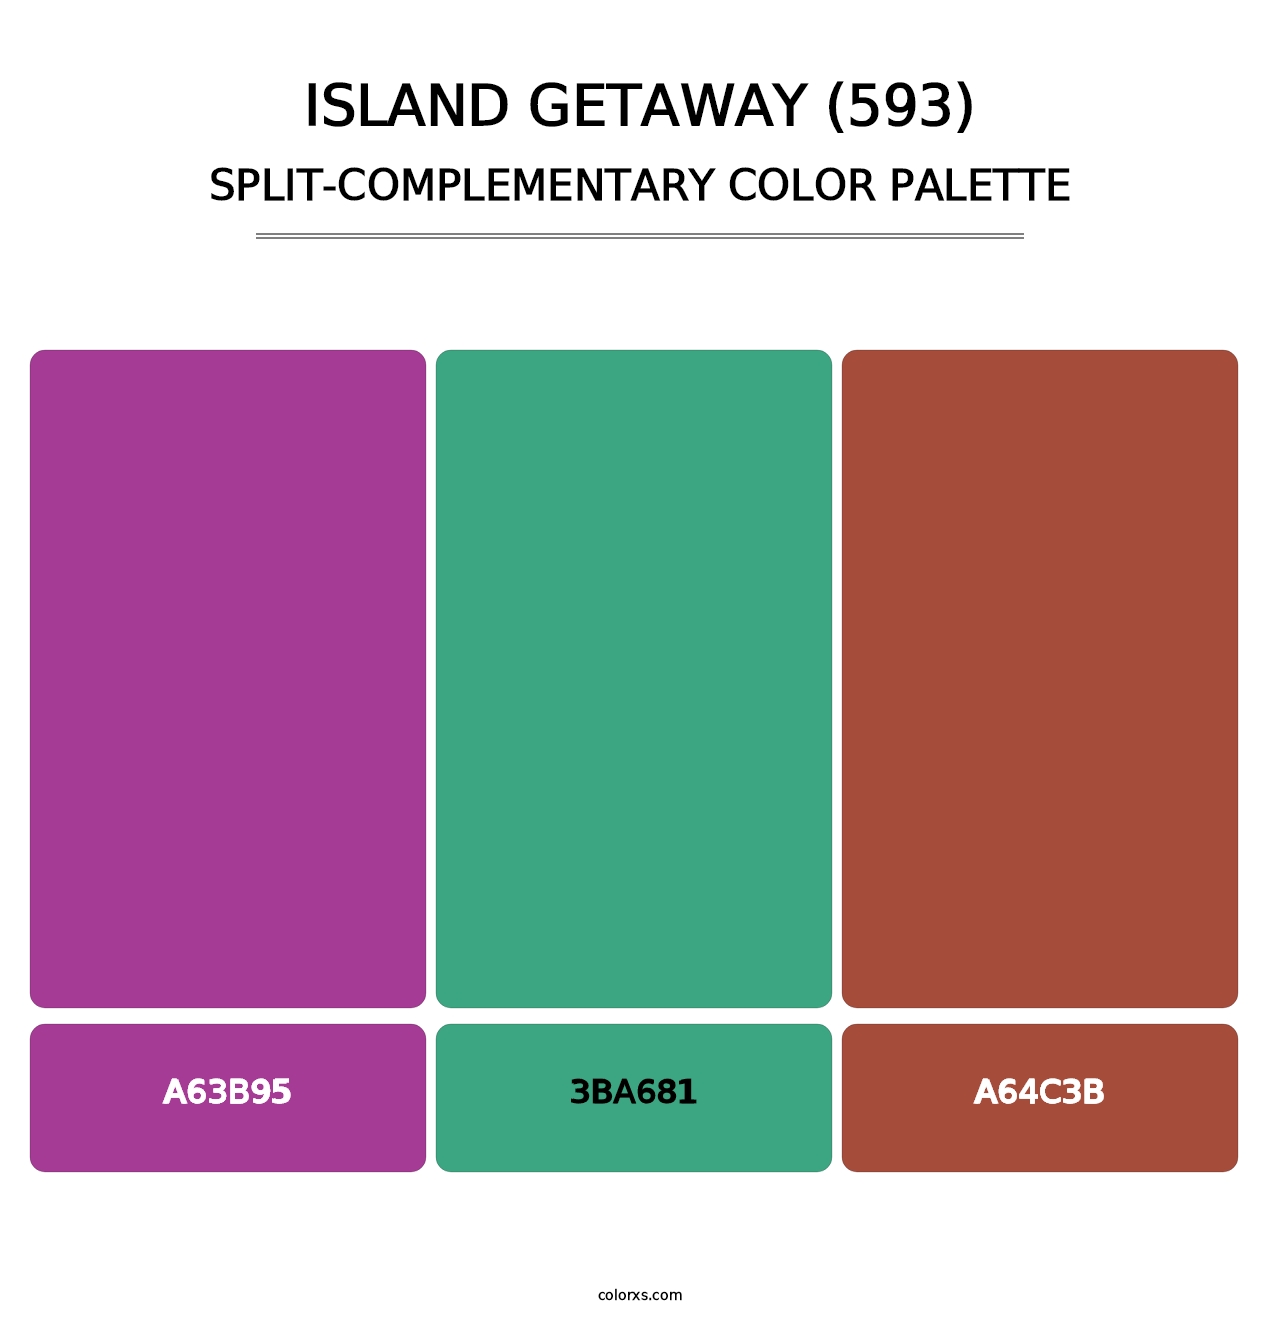 Island Getaway (593) - Split-Complementary Color Palette